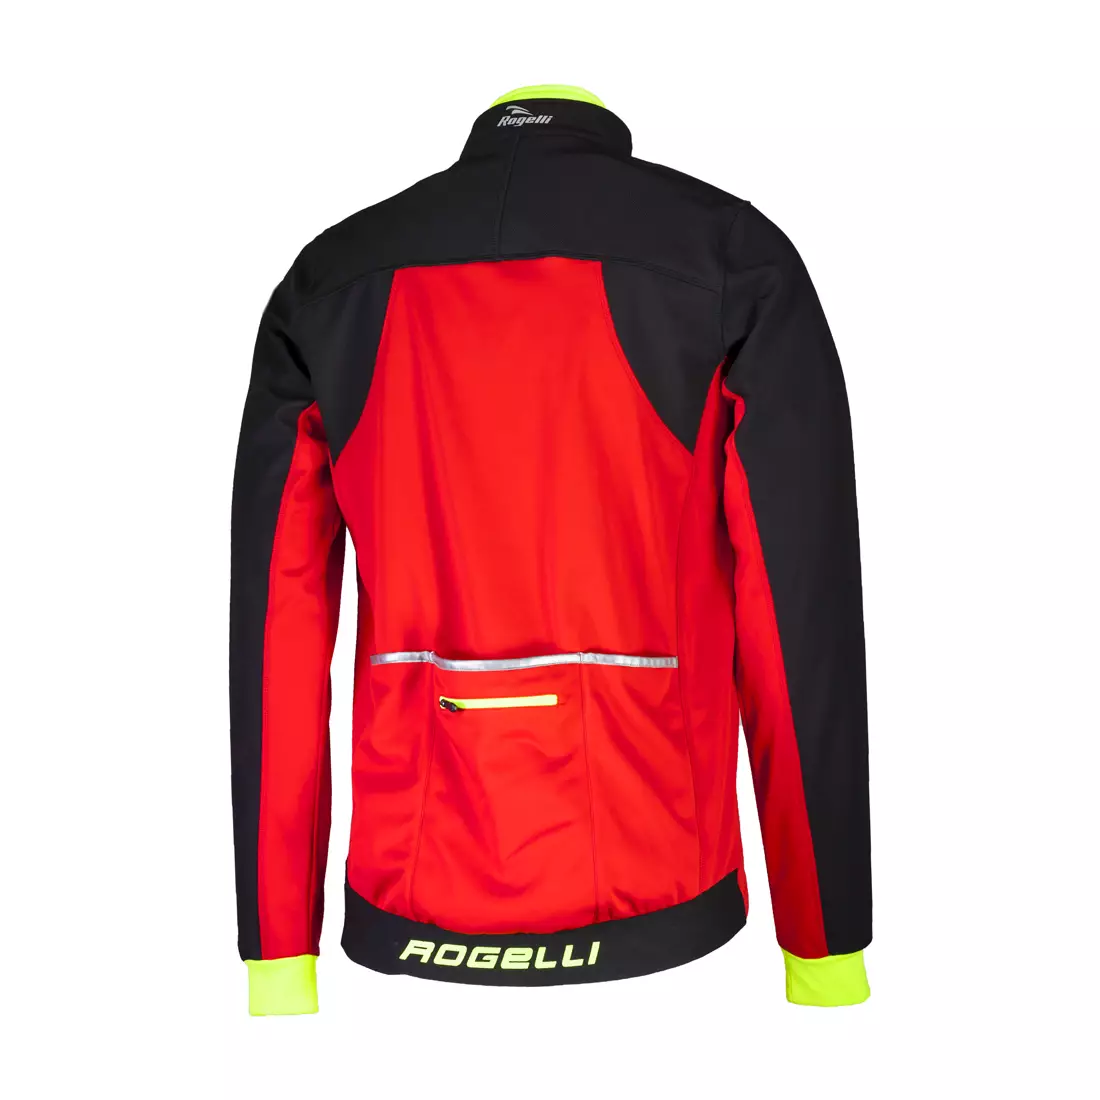 ROGELLI TRABIA zimná cyklistická bunda Softshell, čierno-červeno-fluor 003.116